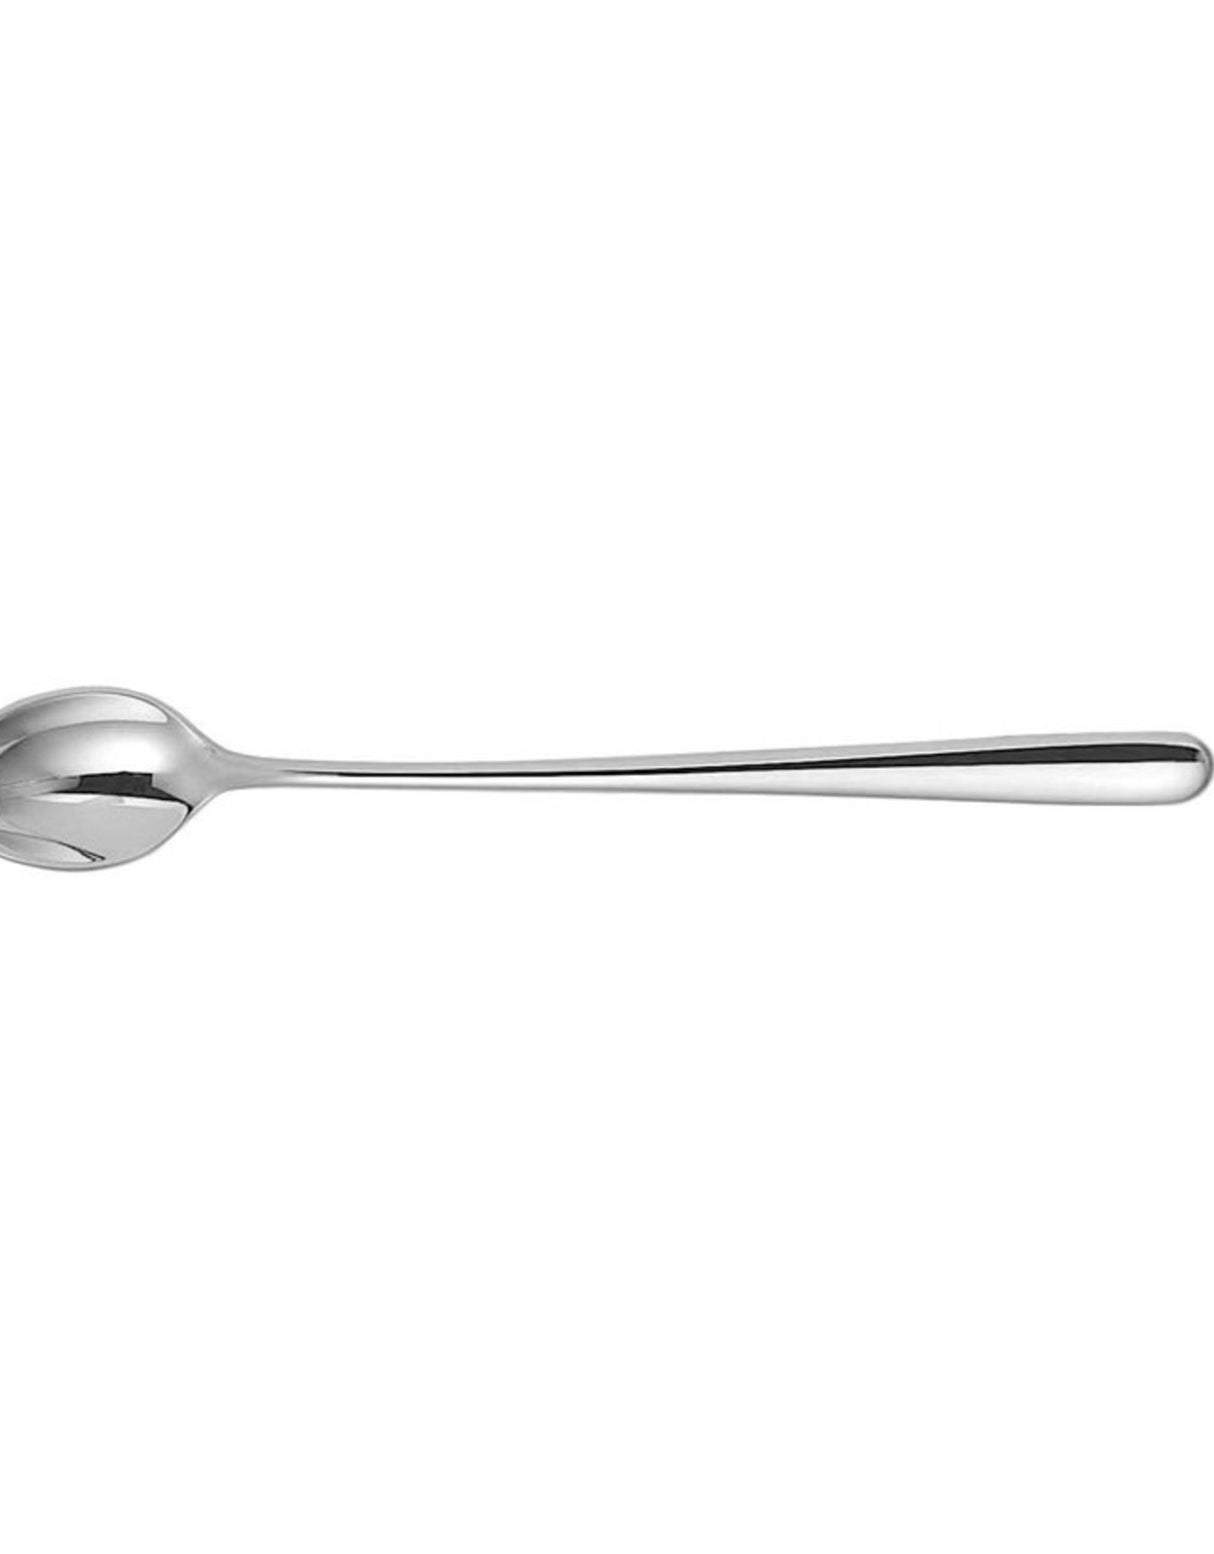 Cuisinox Irish Coffee Spoons